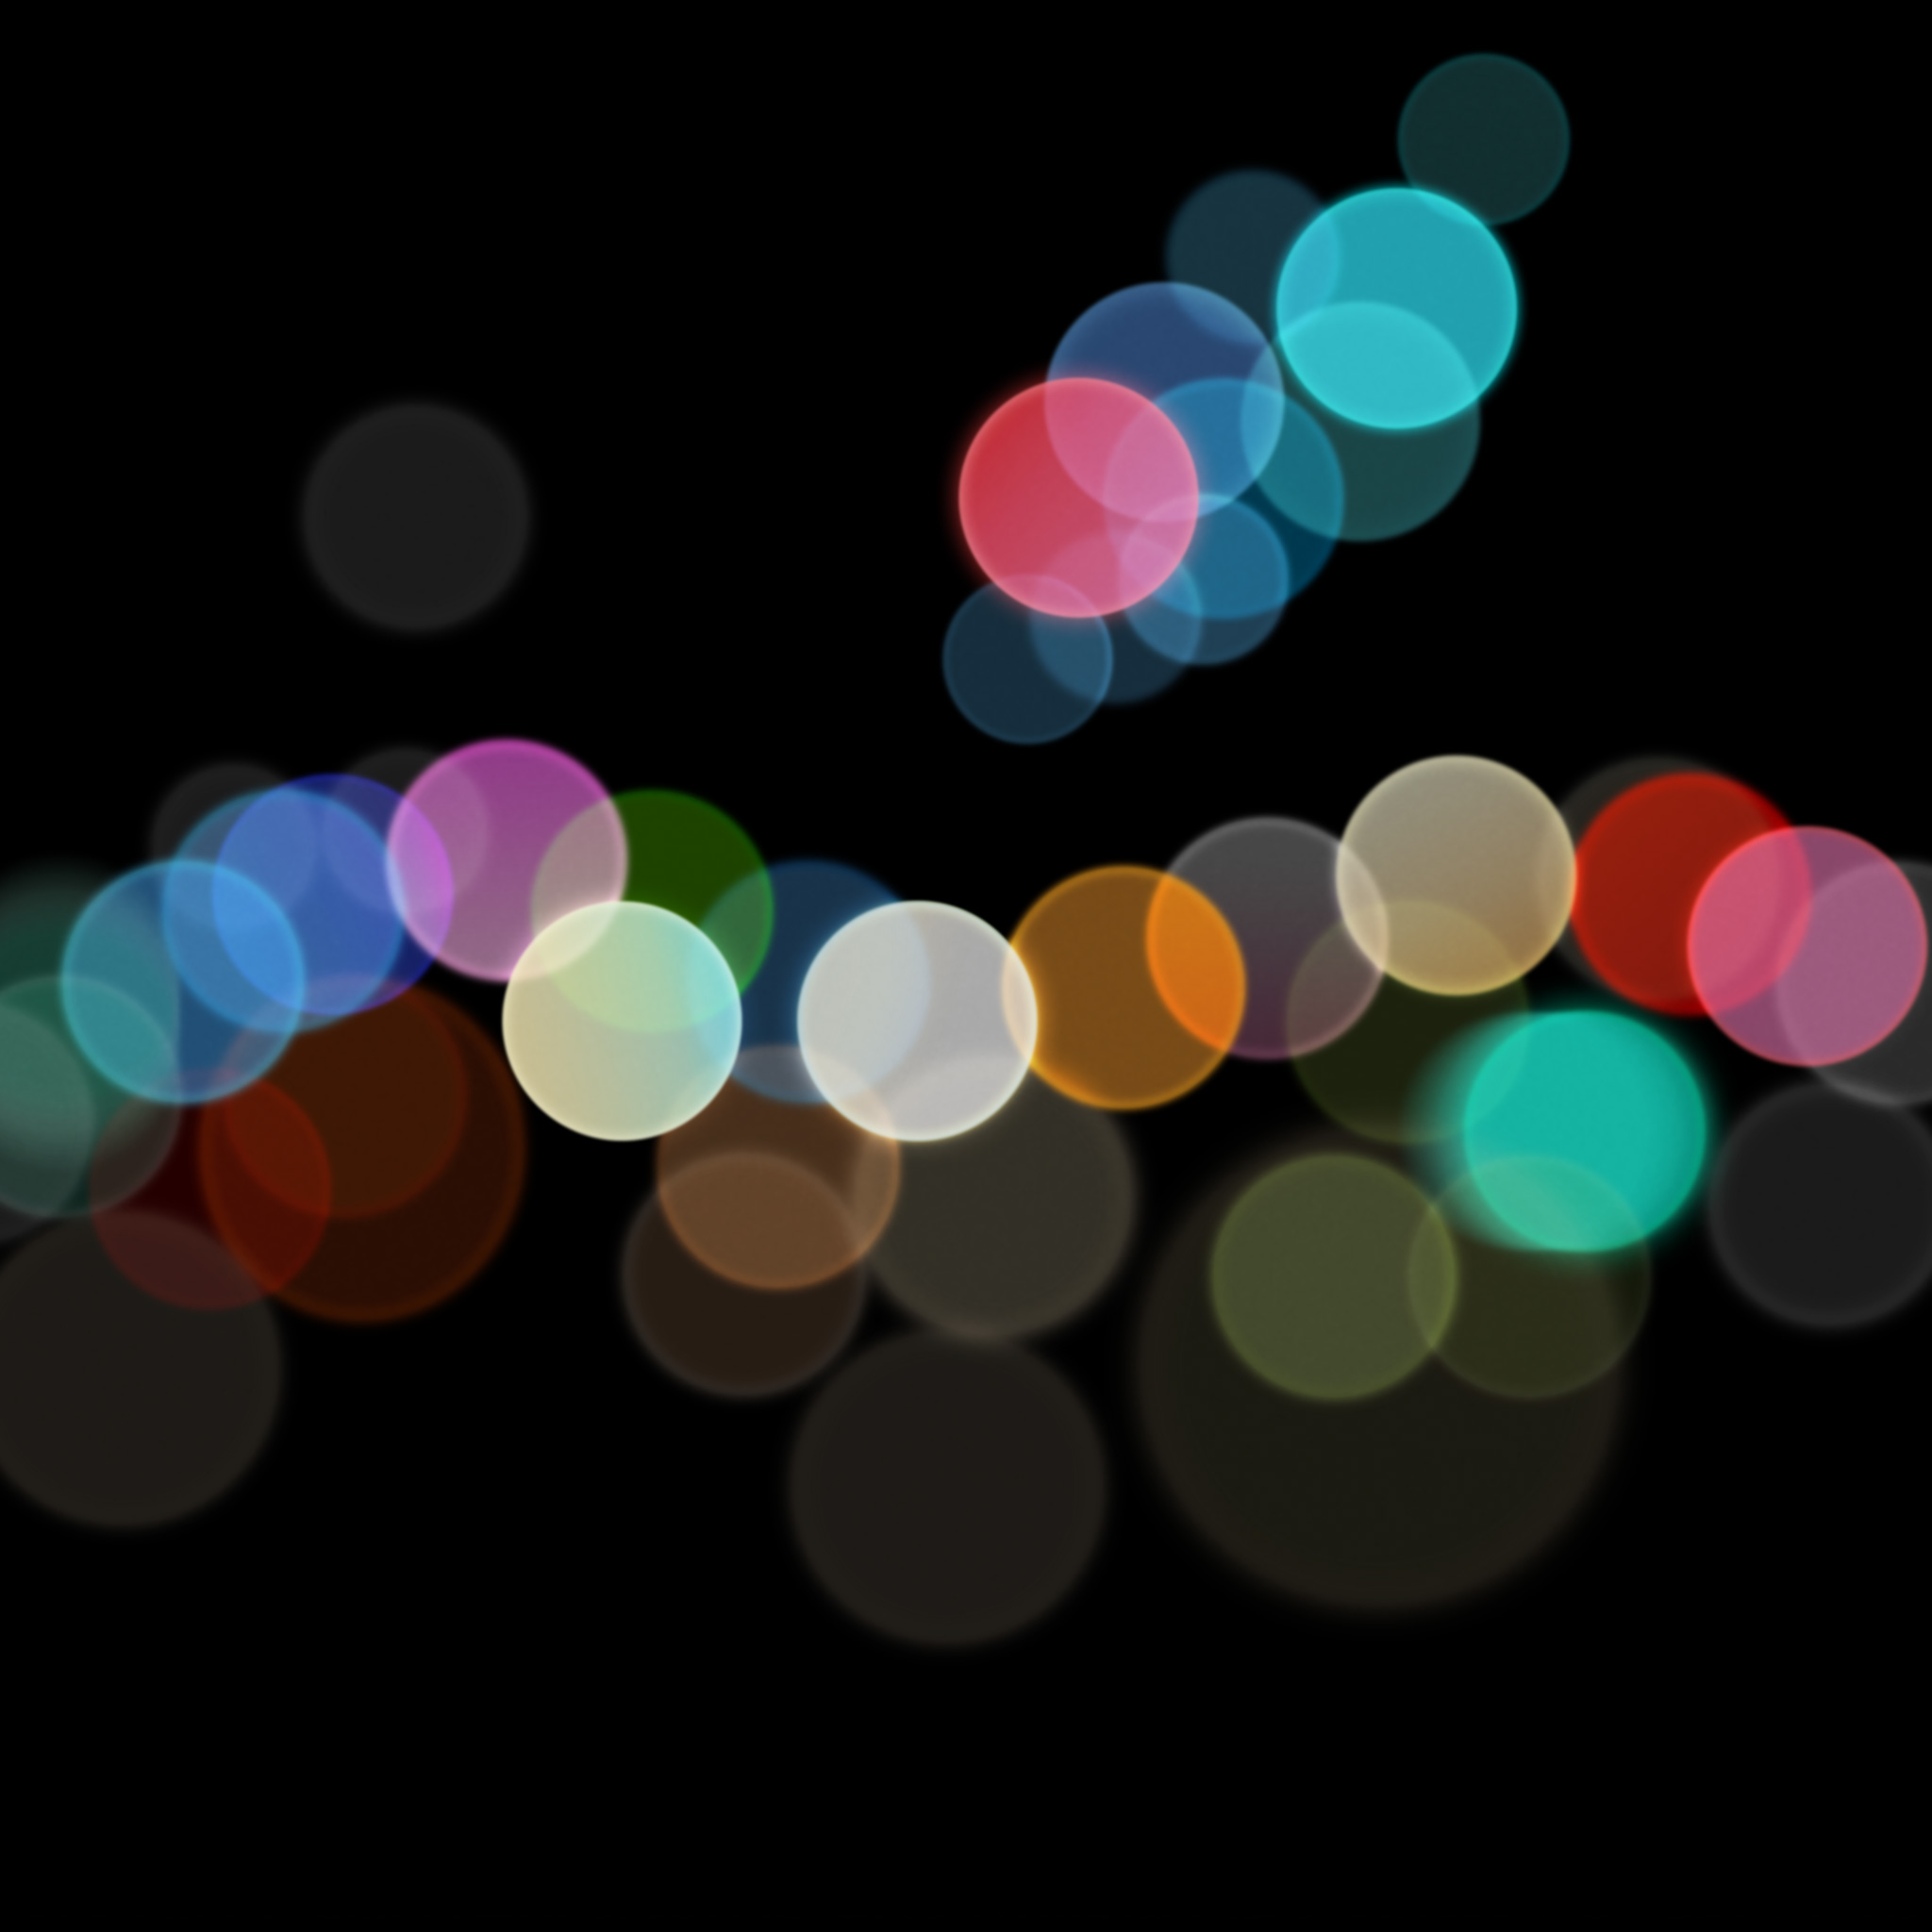 September-7-Apple-Media-Event-Wallpaper-Apple-Invite-iPad